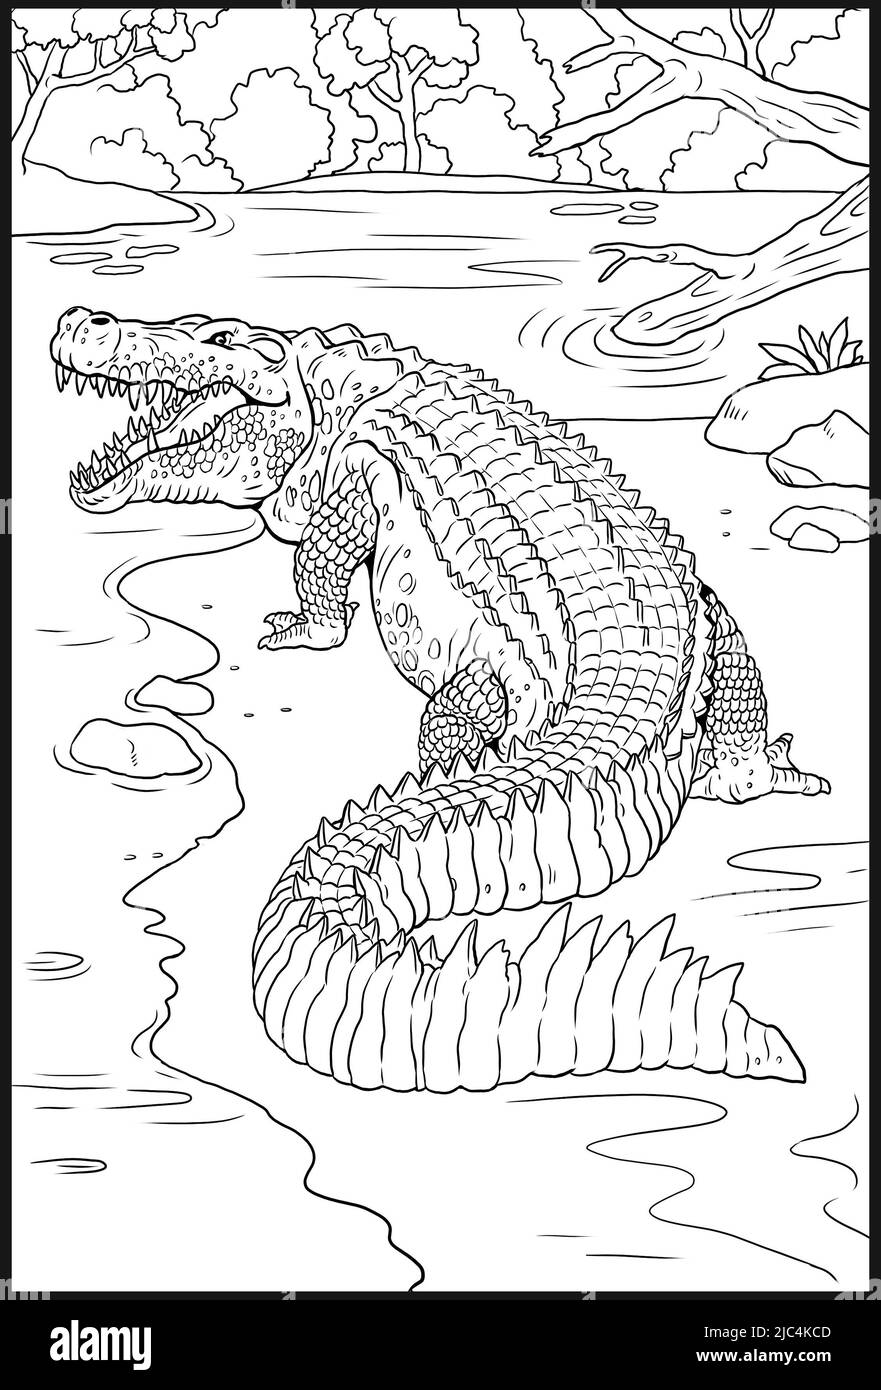 Deinosuchus prehistoric crocodilian, illustration - Stock Image - C049/0078  - Science Photo Library